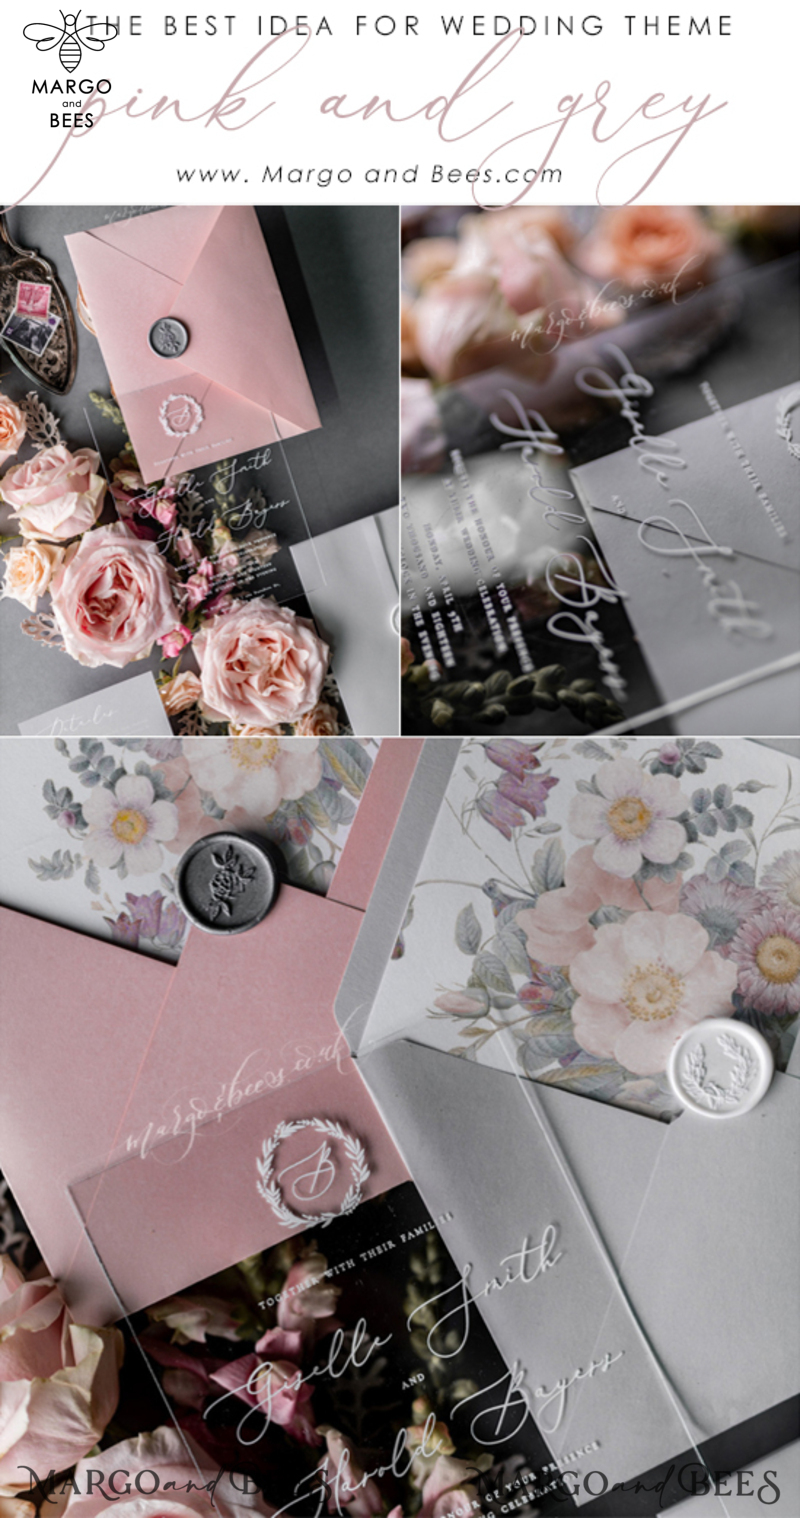 Luxury Acrylic Plexi Wedding Invitations, Romantic Blush Pink Wedding Invites, Elegant Light Grey Wedding Cards With Vellum Cover, Vintage Handmade Wedding Stationery-37